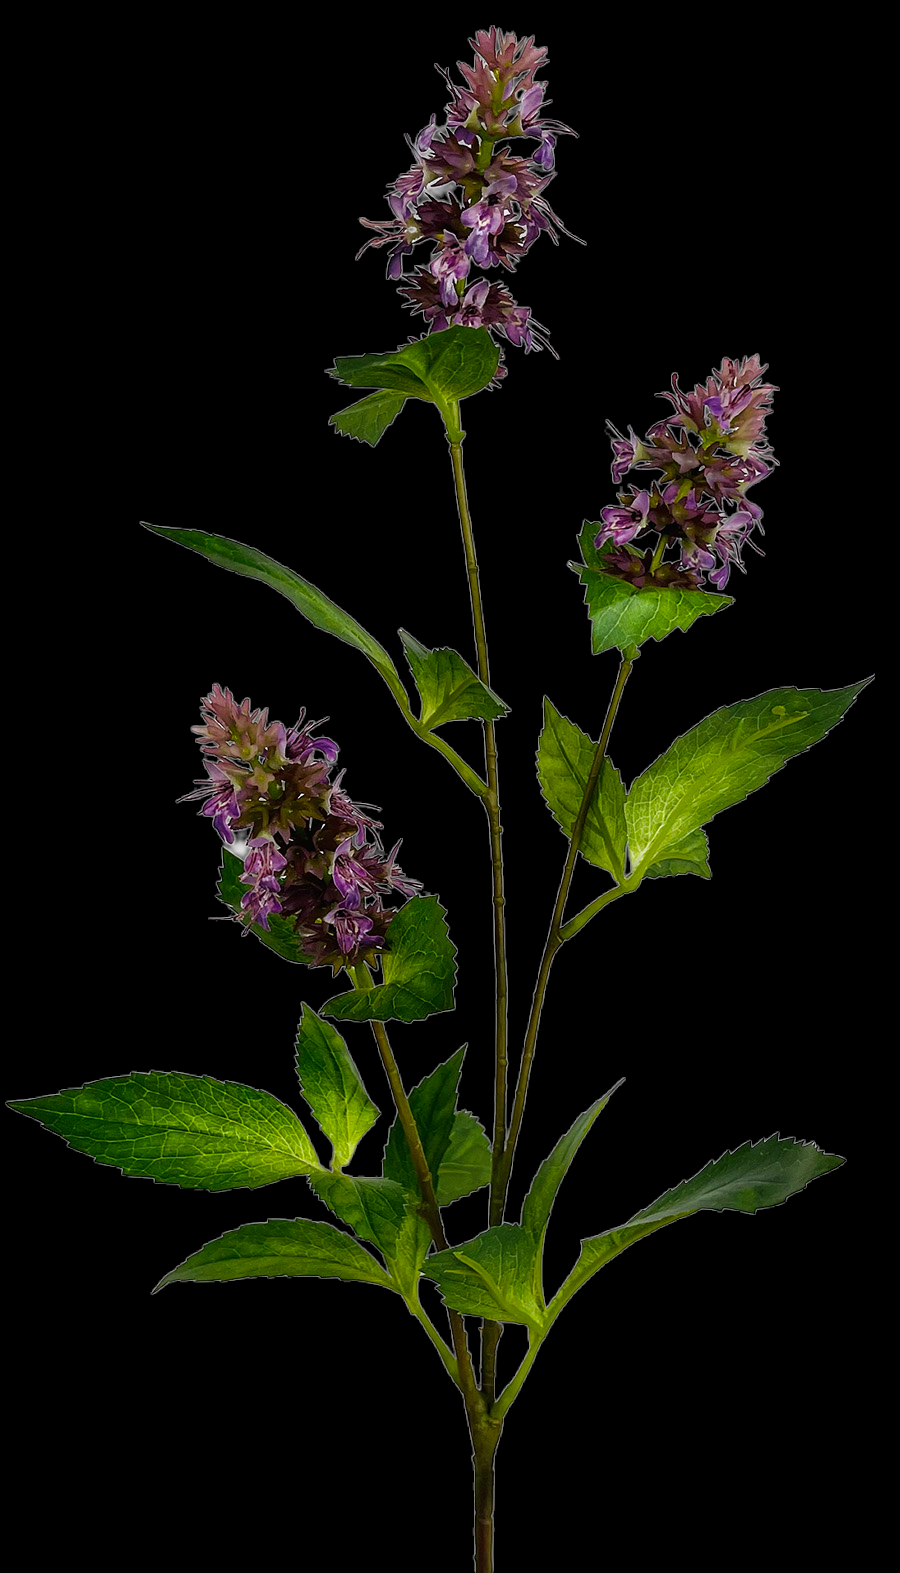 Purple Blooming Mint Branch
22"